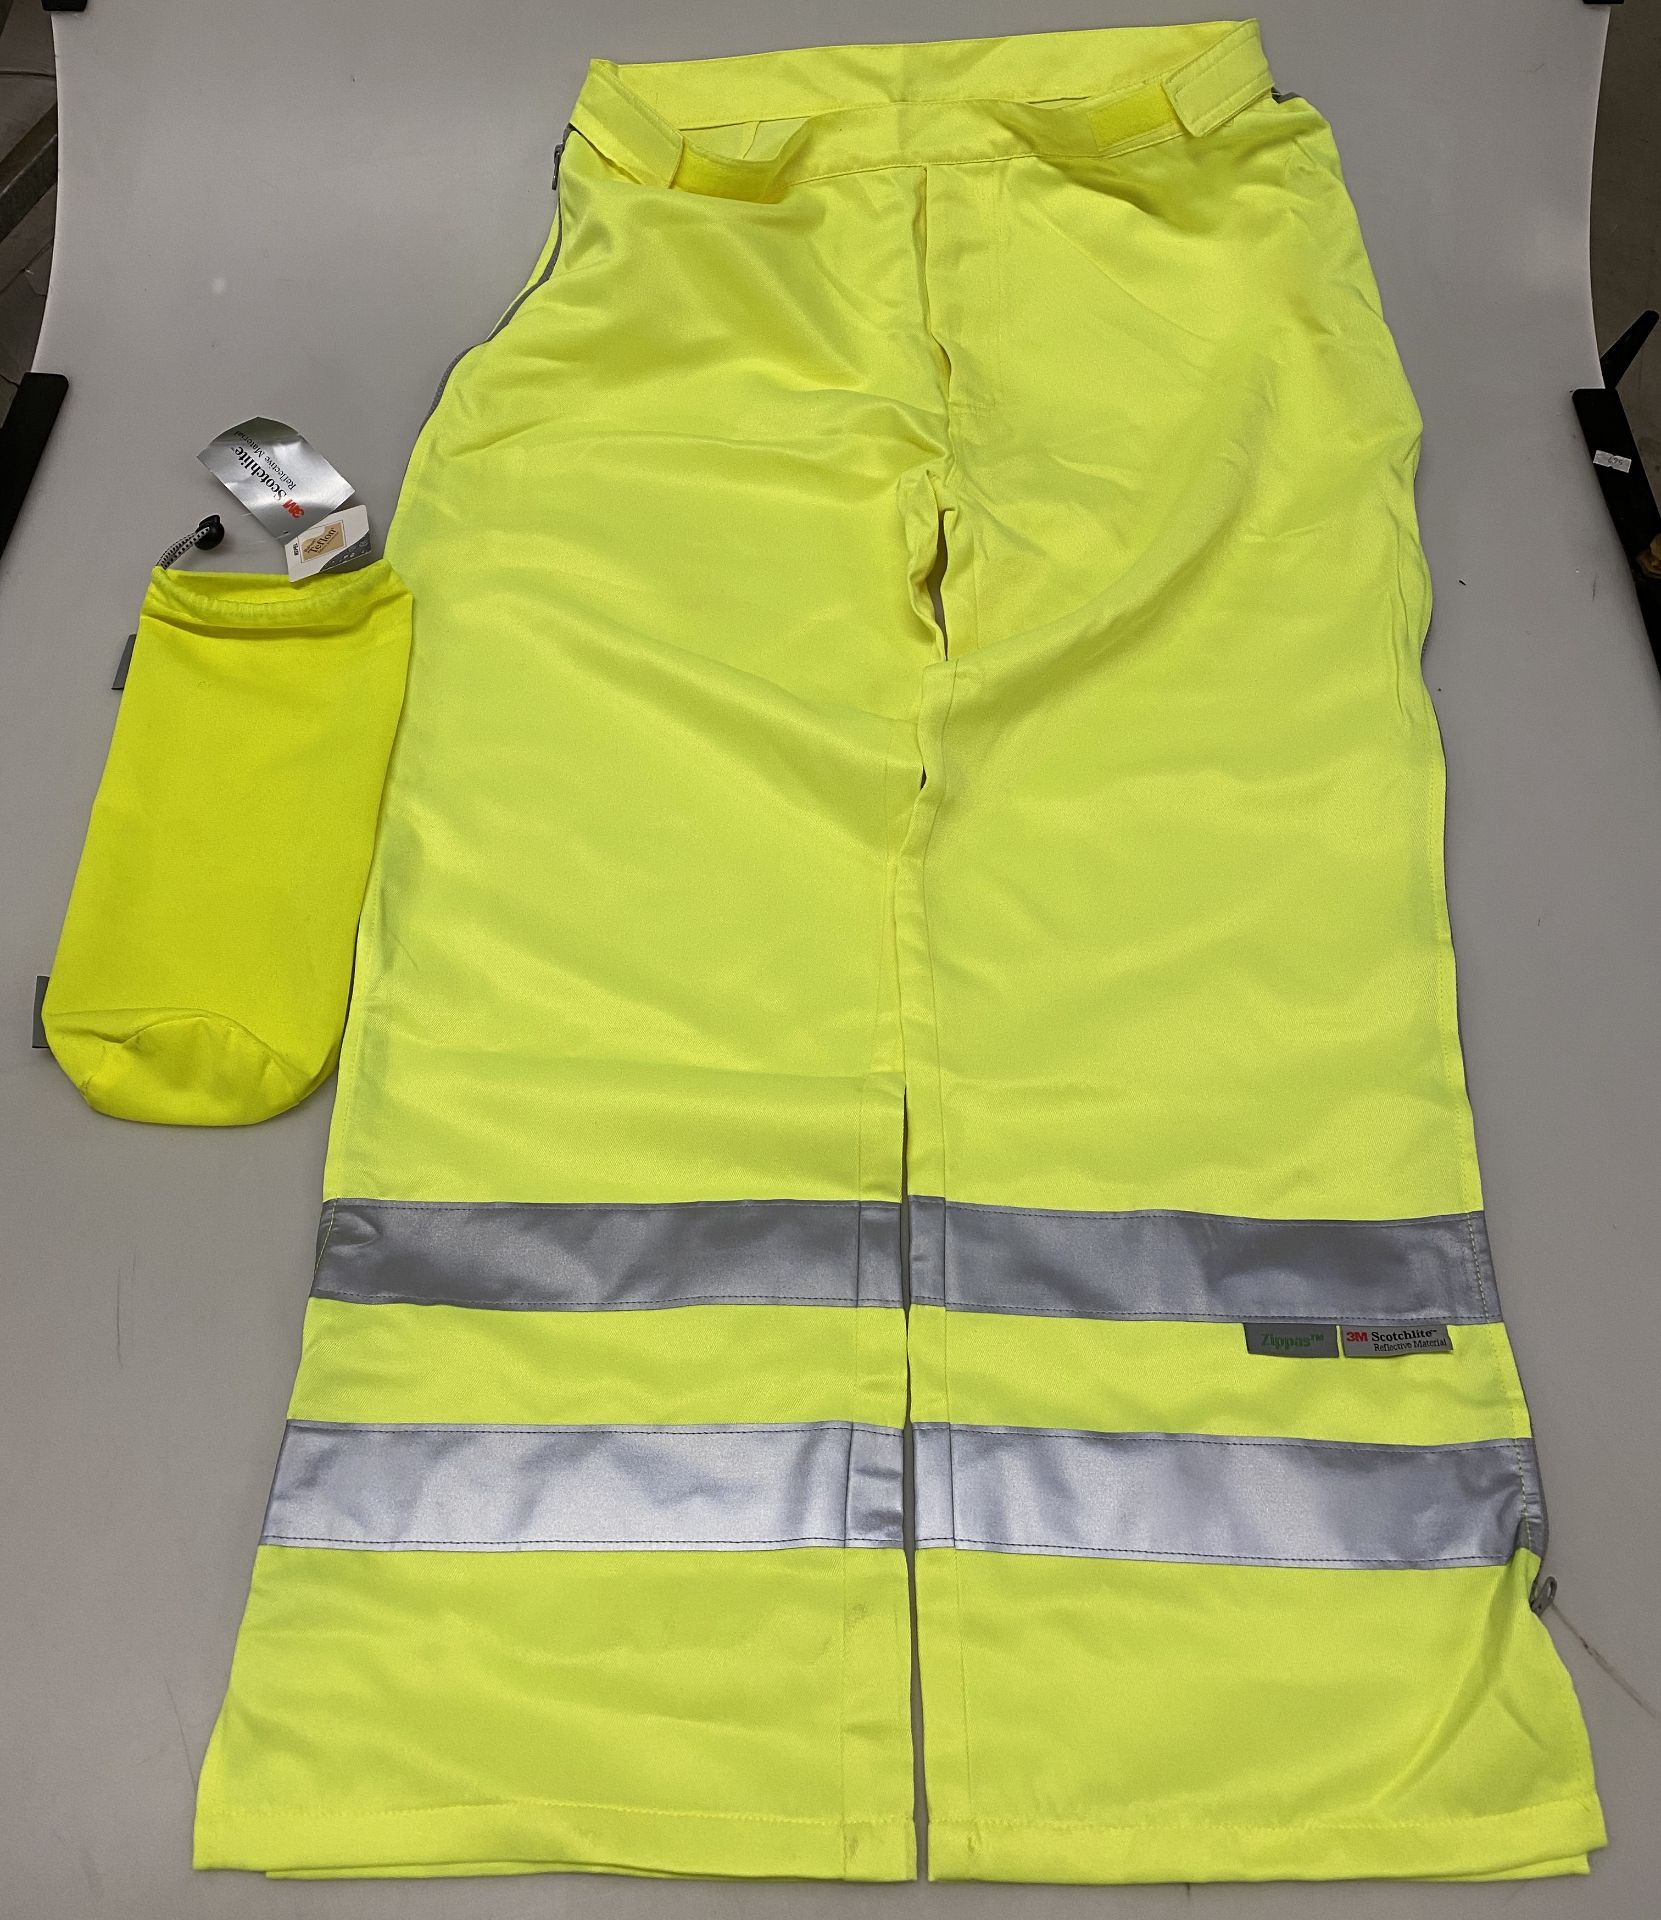 16 x Hi-Vi Zippas MX yellow PPE high visibility Teflon/Scotchlite zipped over trousers and bags.